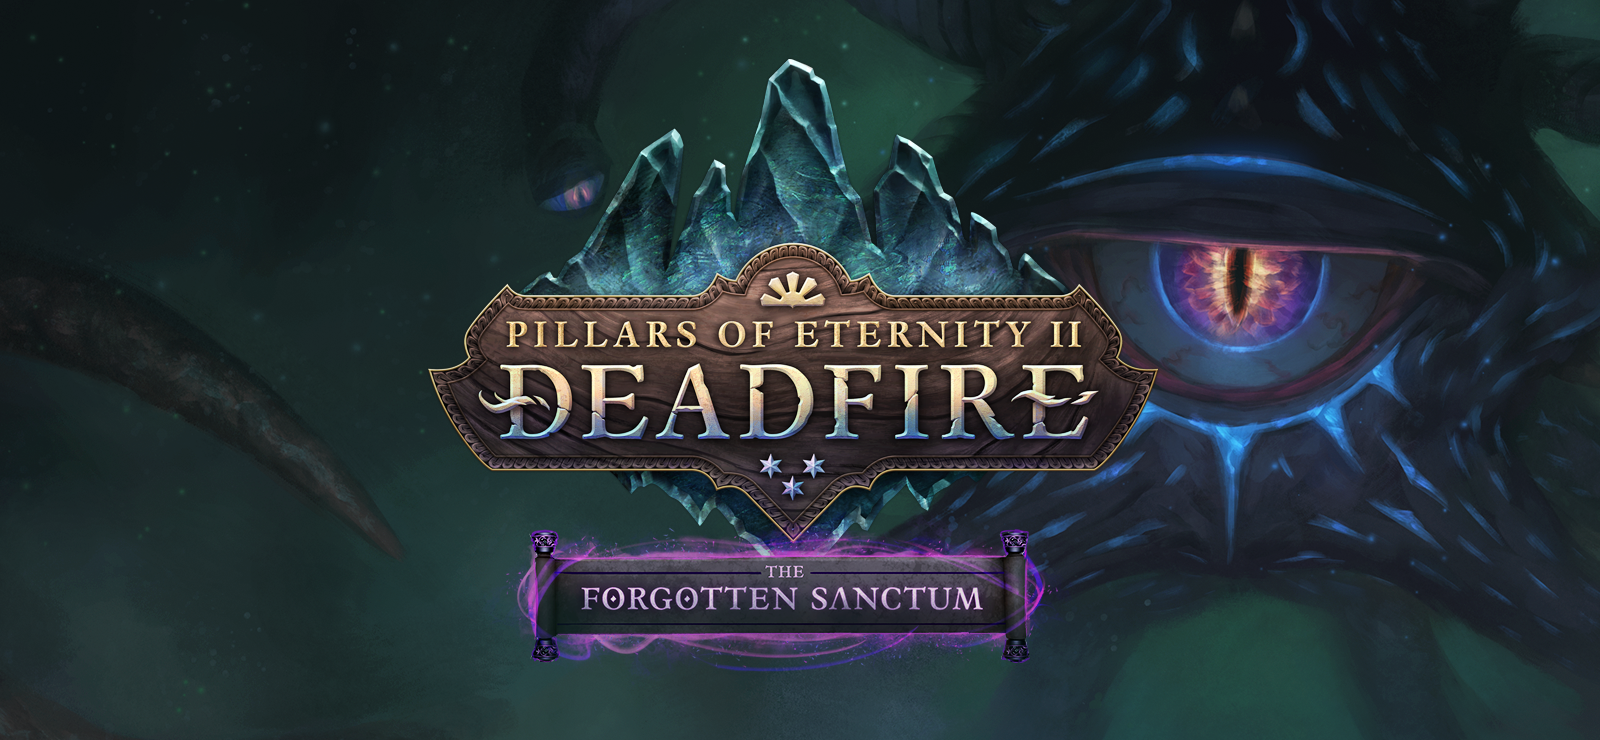 Pillars Of Eternity II: Deadfire - The Forgotten Sanctum